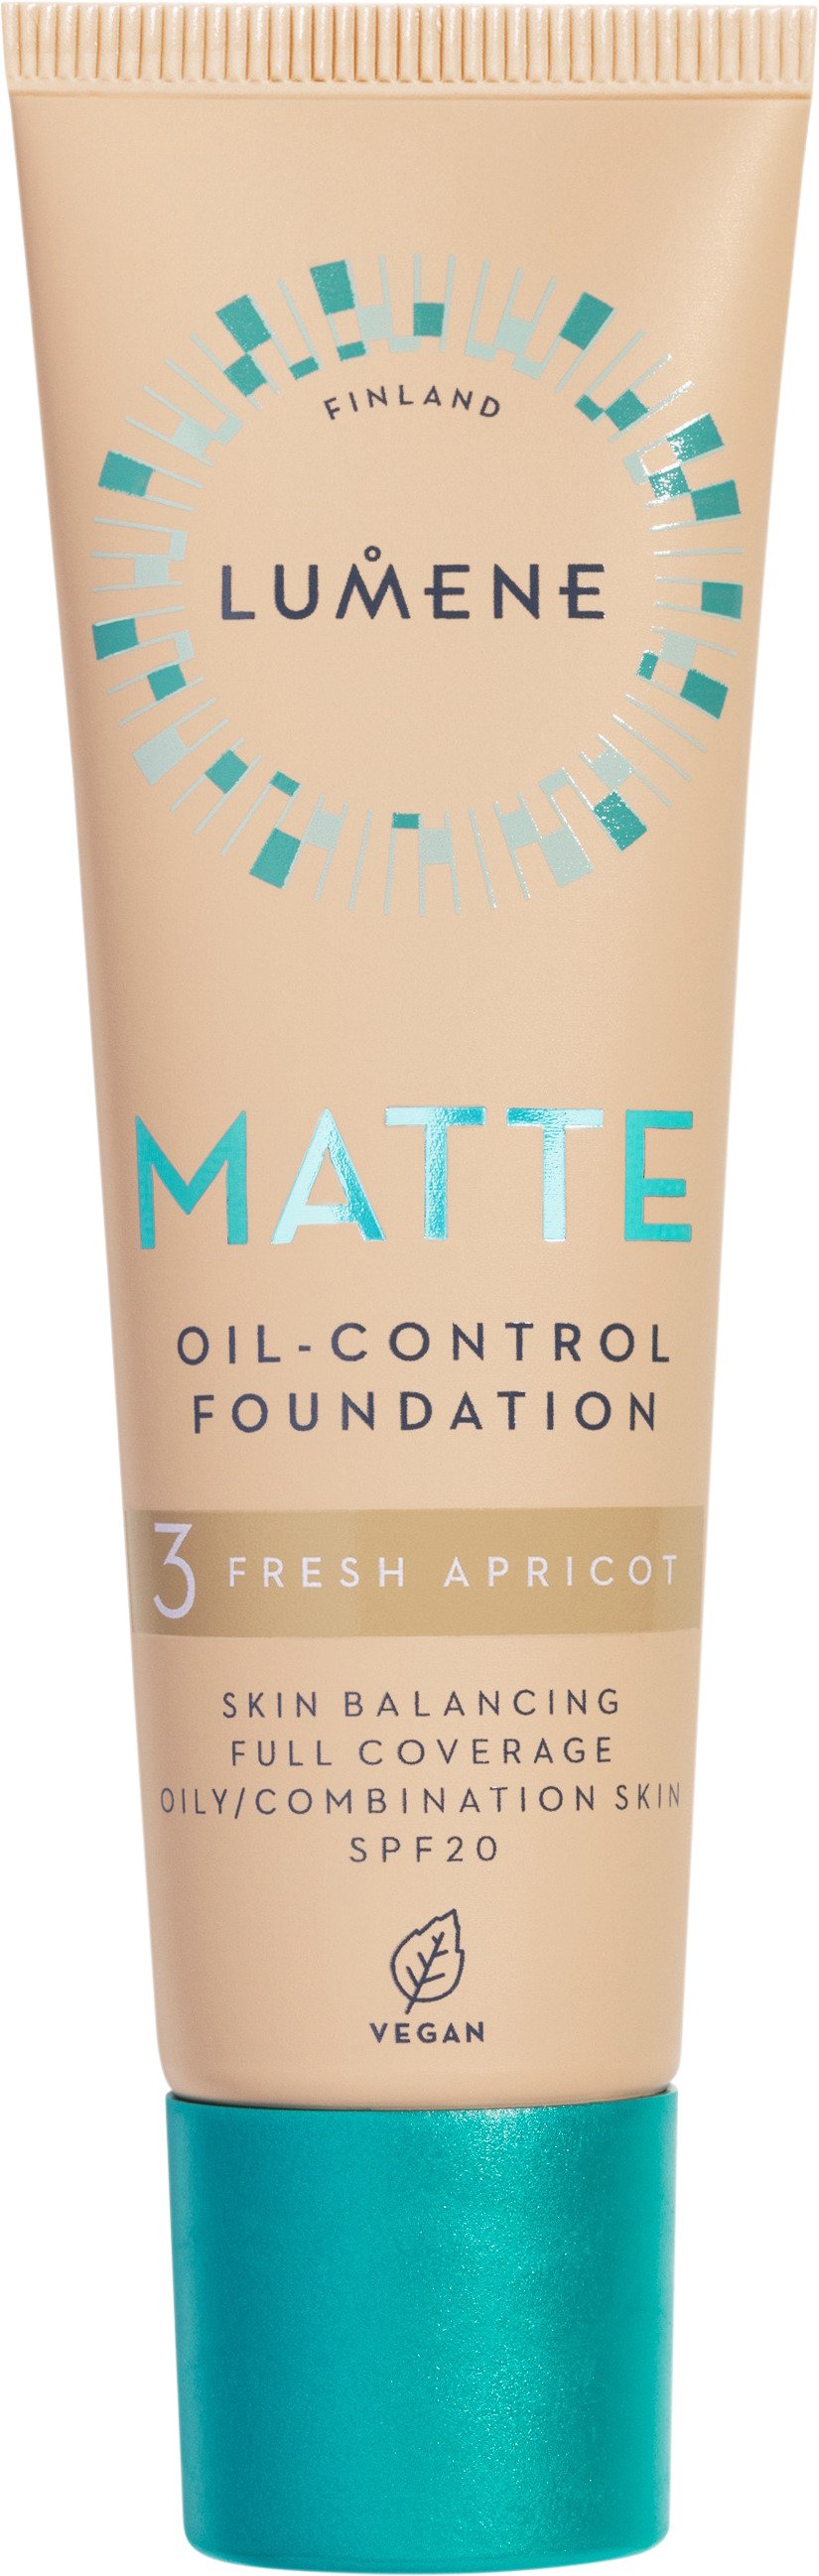 Lumene Matte Oil-Control Foundation SPF20 3 Fresh Apricot 30 ml